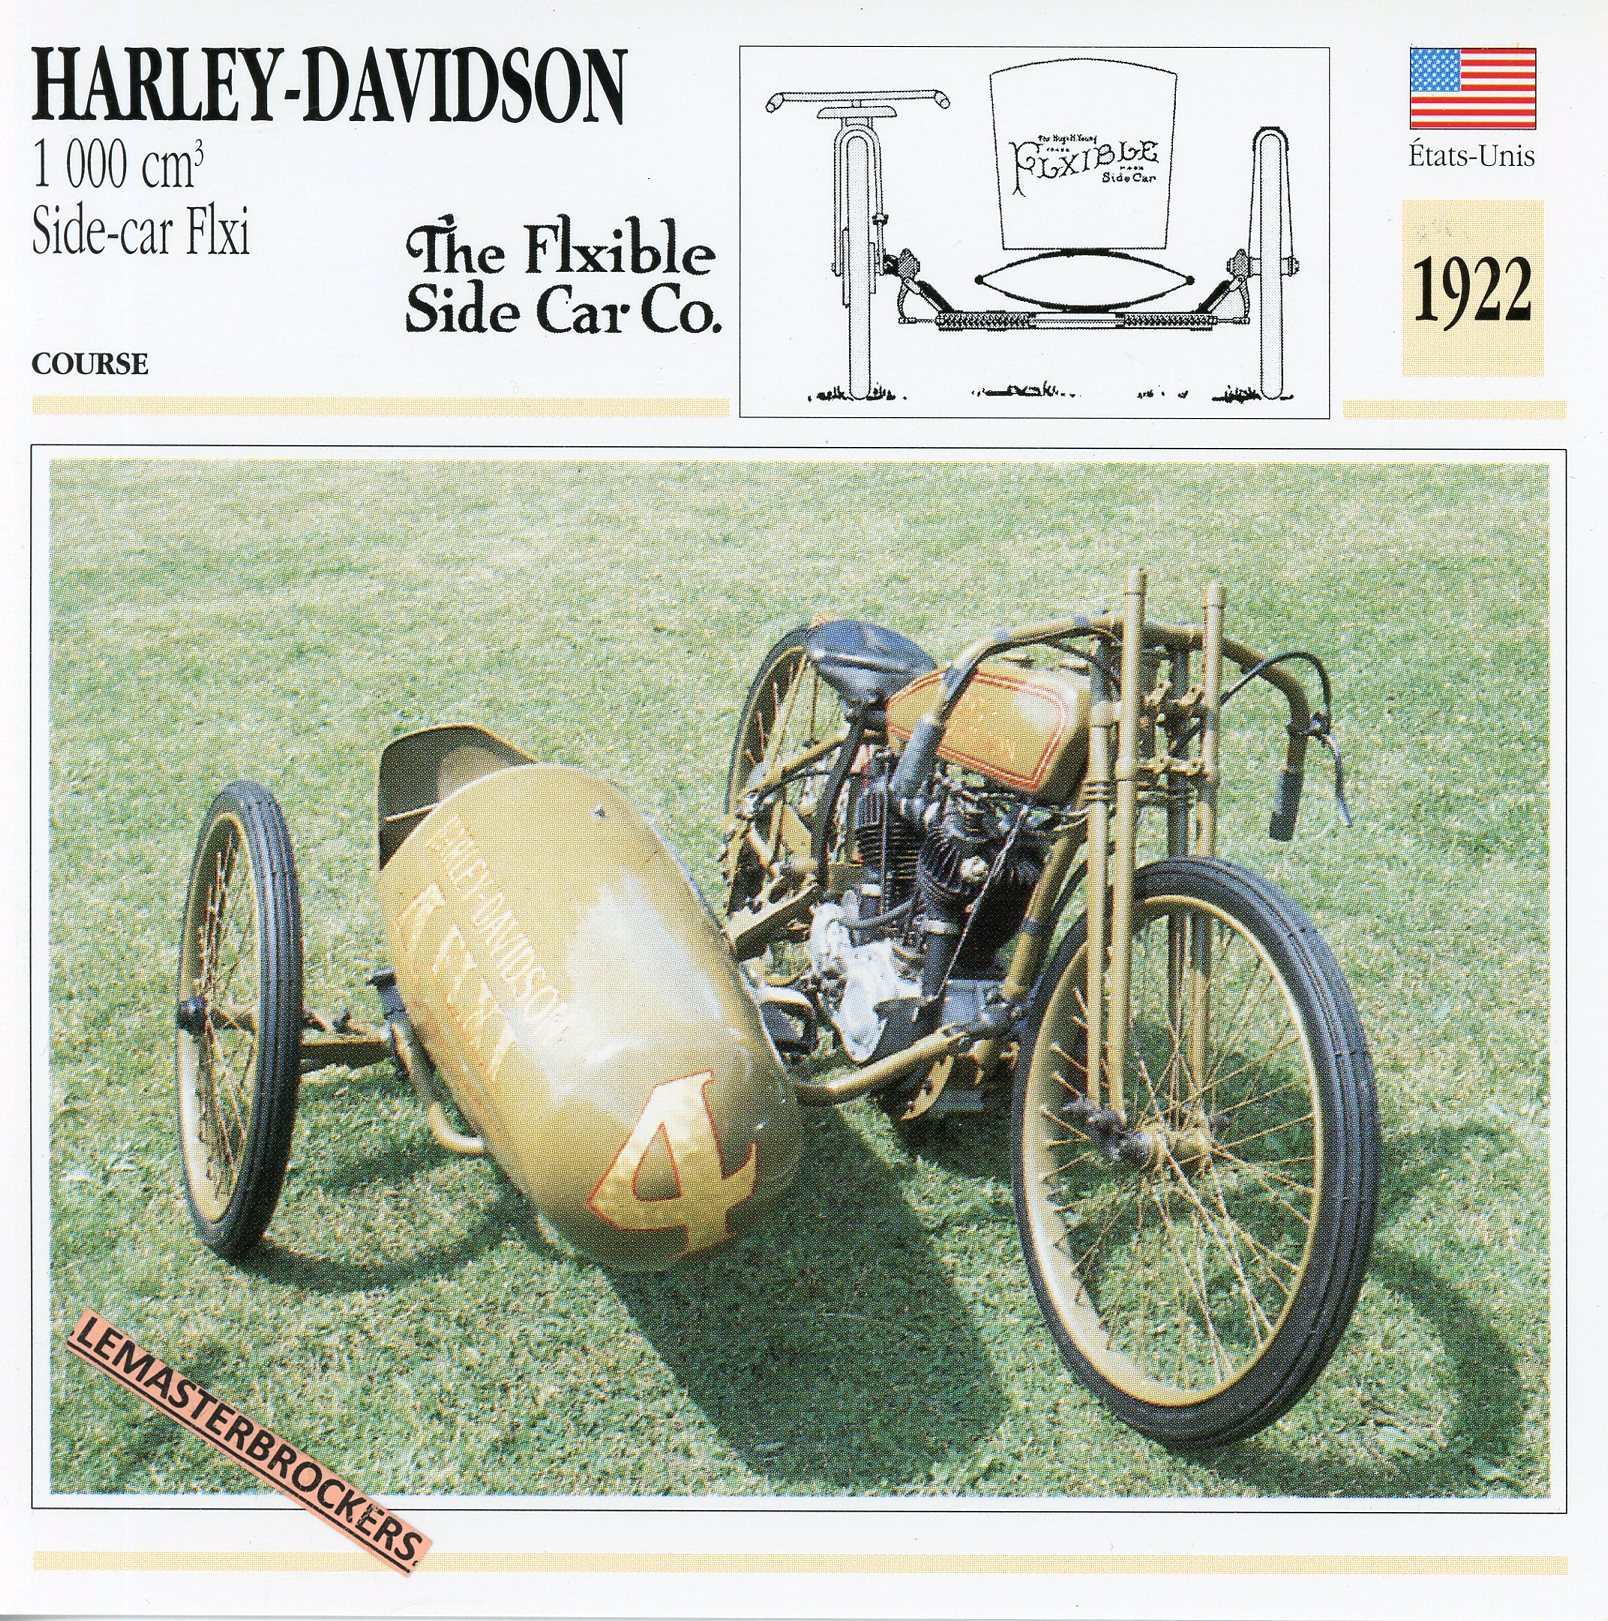 HARLEY-DAVIDSON-1922-LEMASTERBROCKERS-FICHE-MOTO-ATLAS-SIDE-CAR-FLXI-CARD